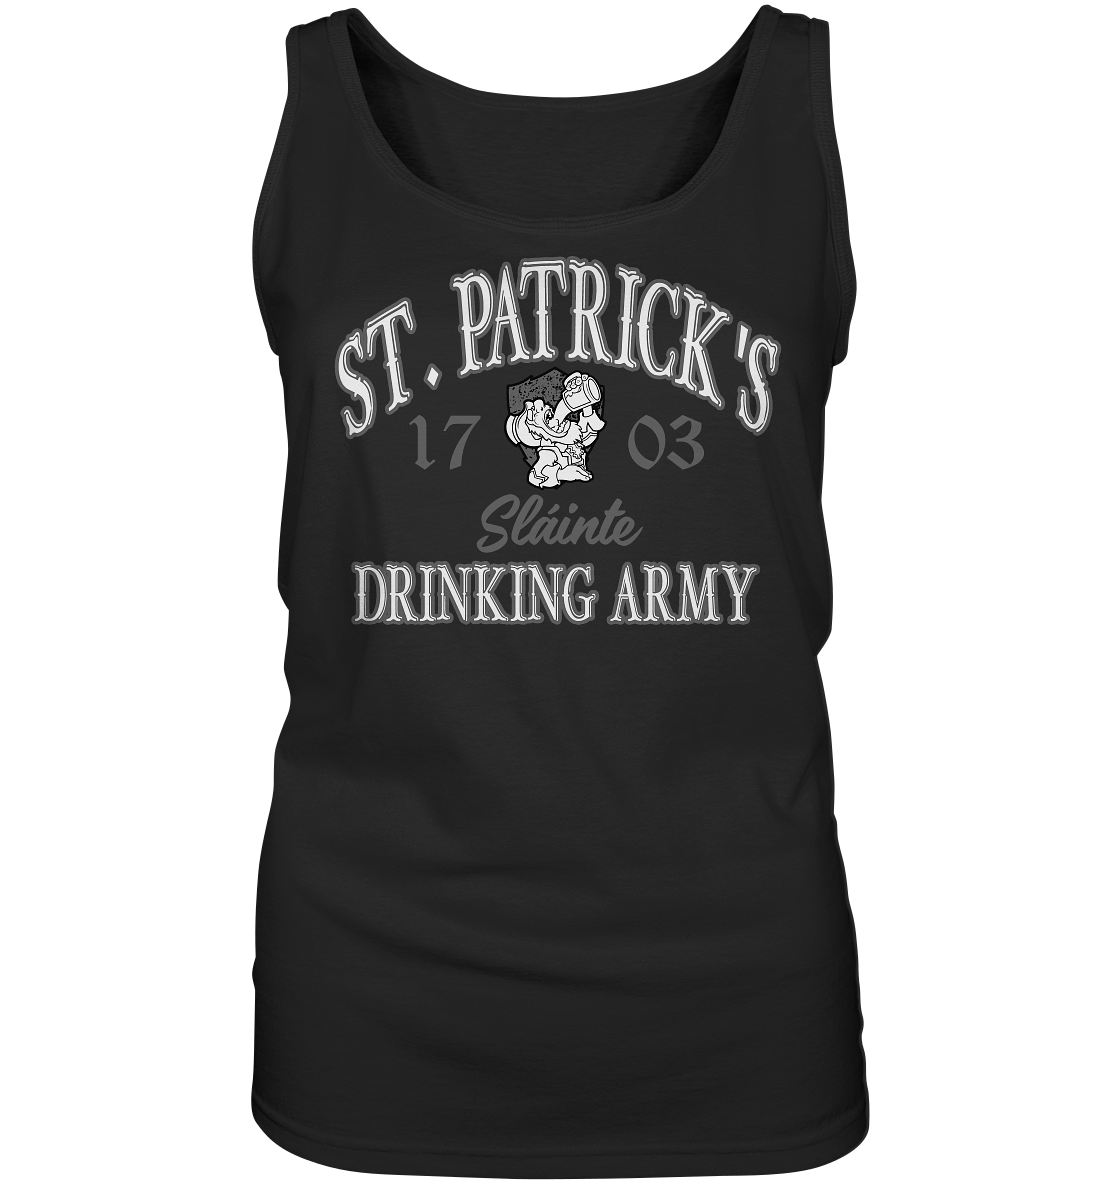 St. Patrick's Drinking Army "Sláinte" - Ladies Tank-Top